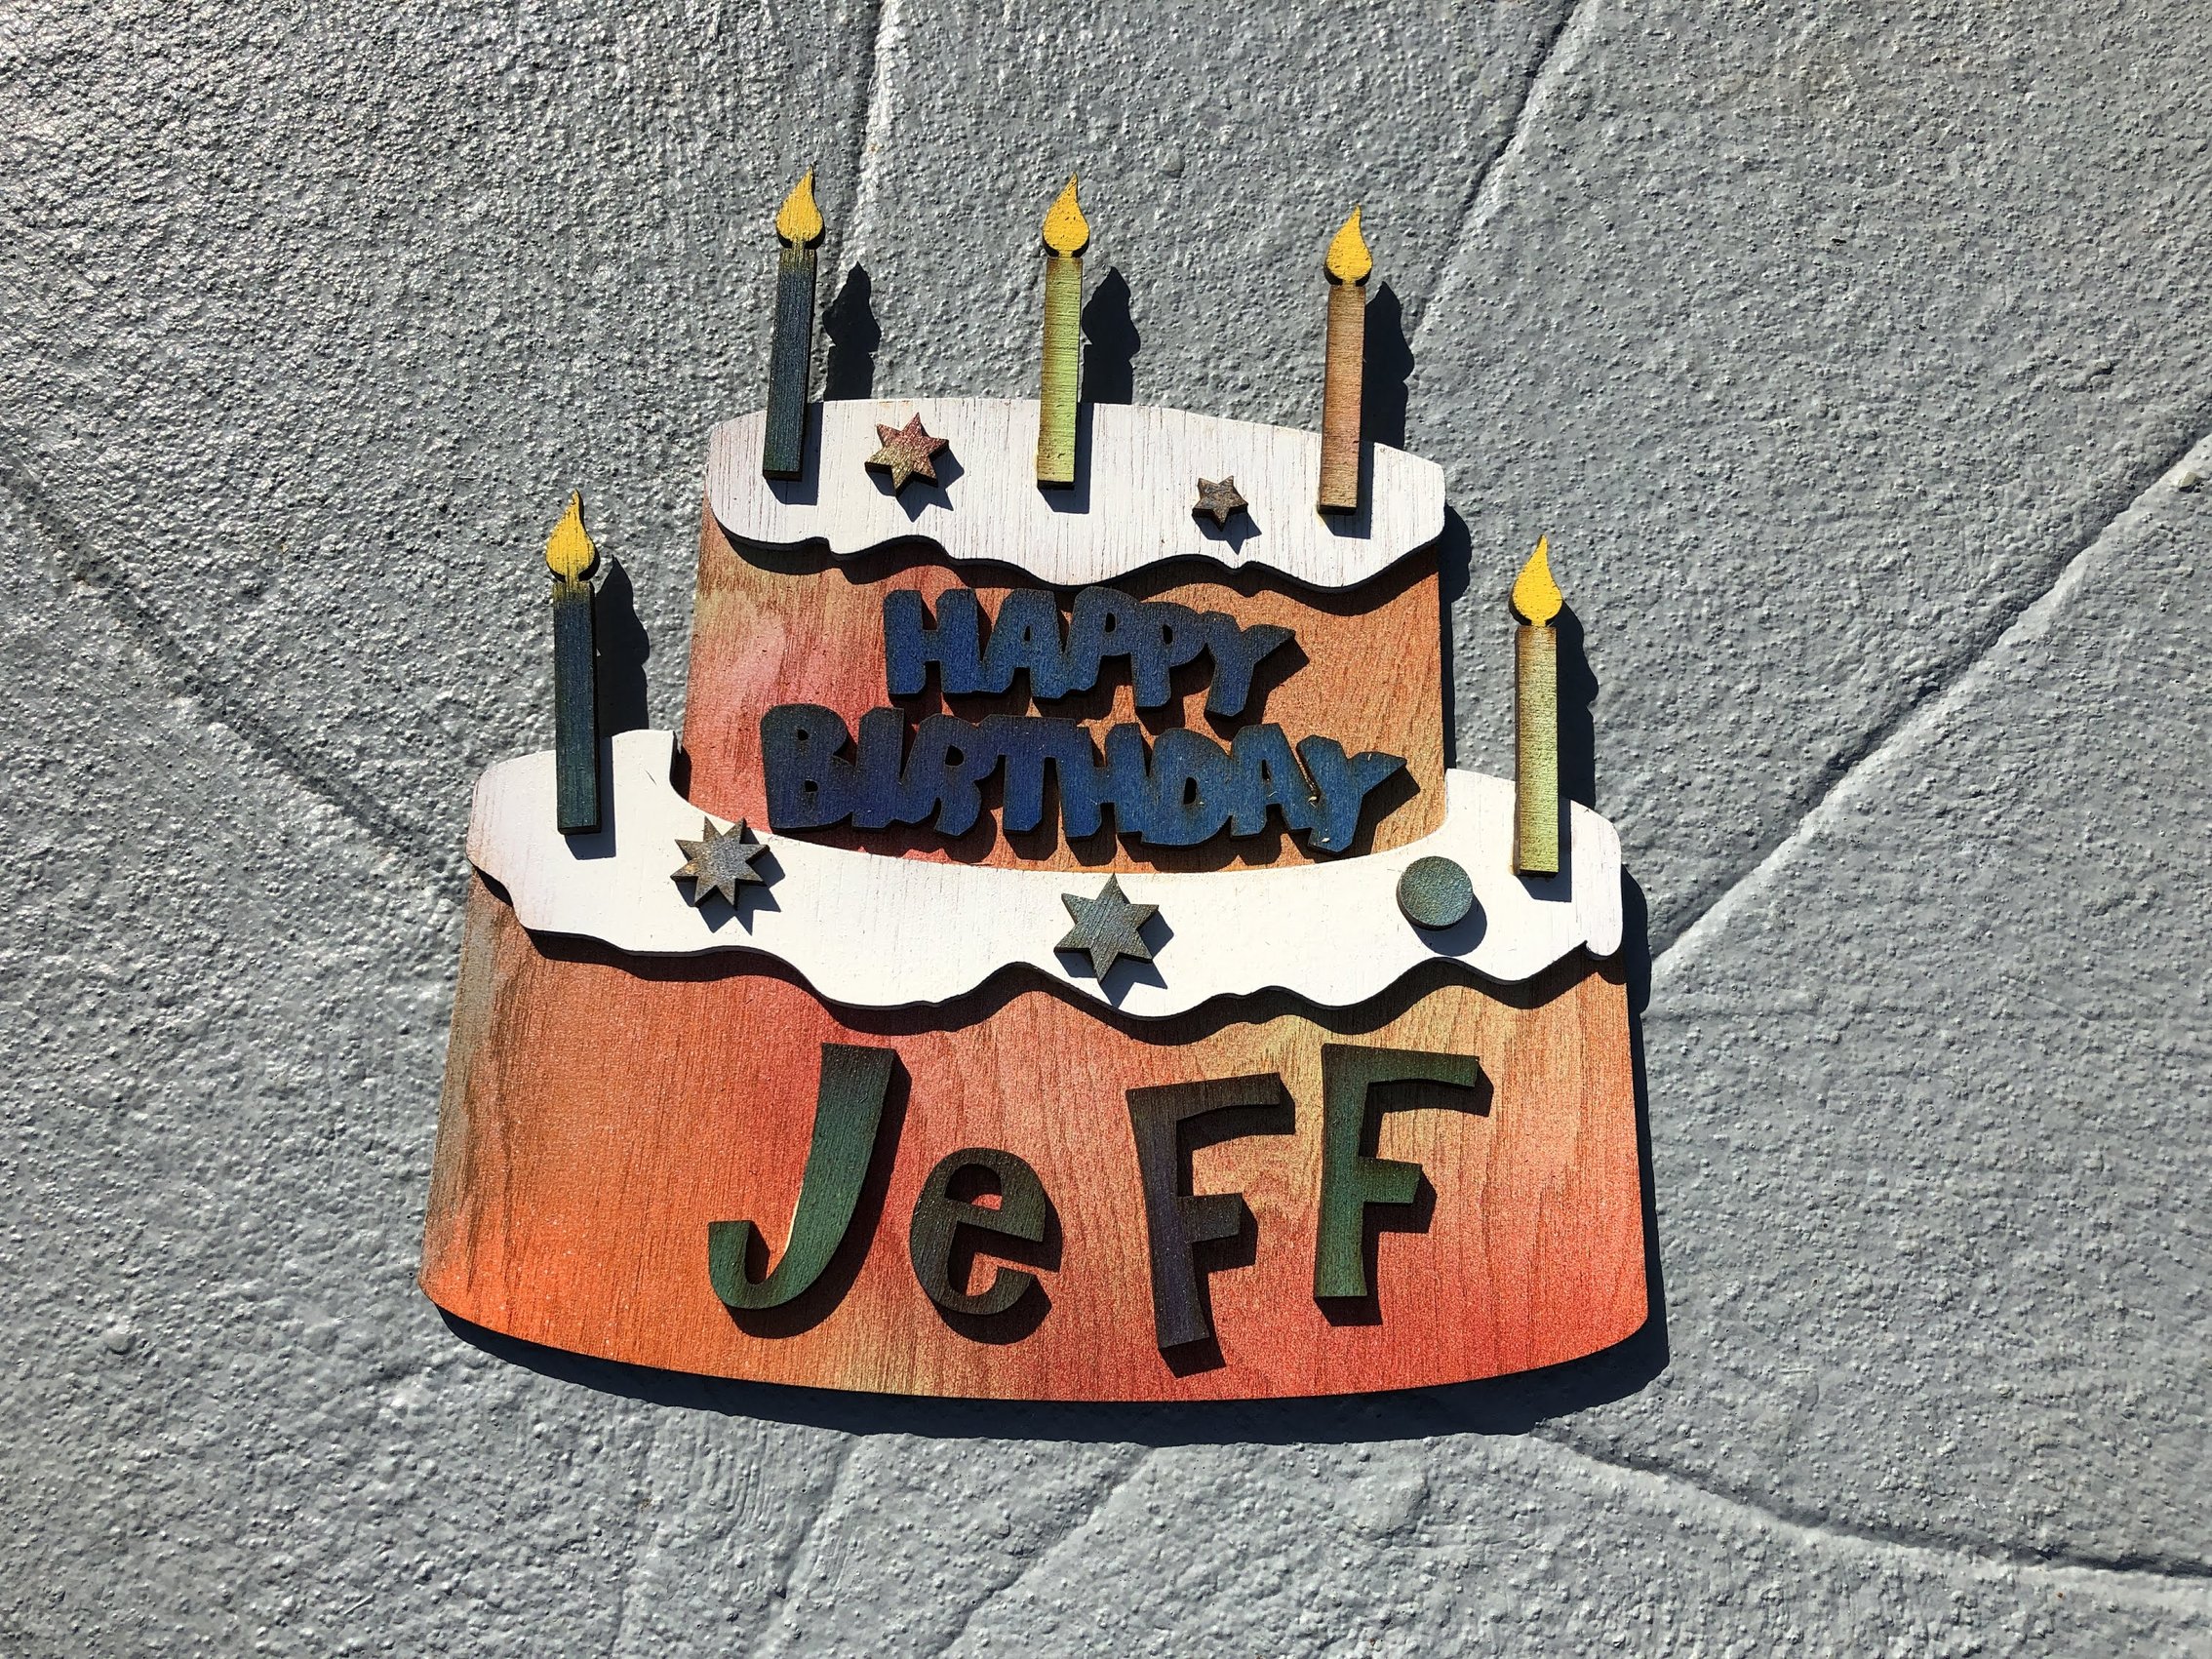 Happy Birthday Wooden Cake (1).jpg